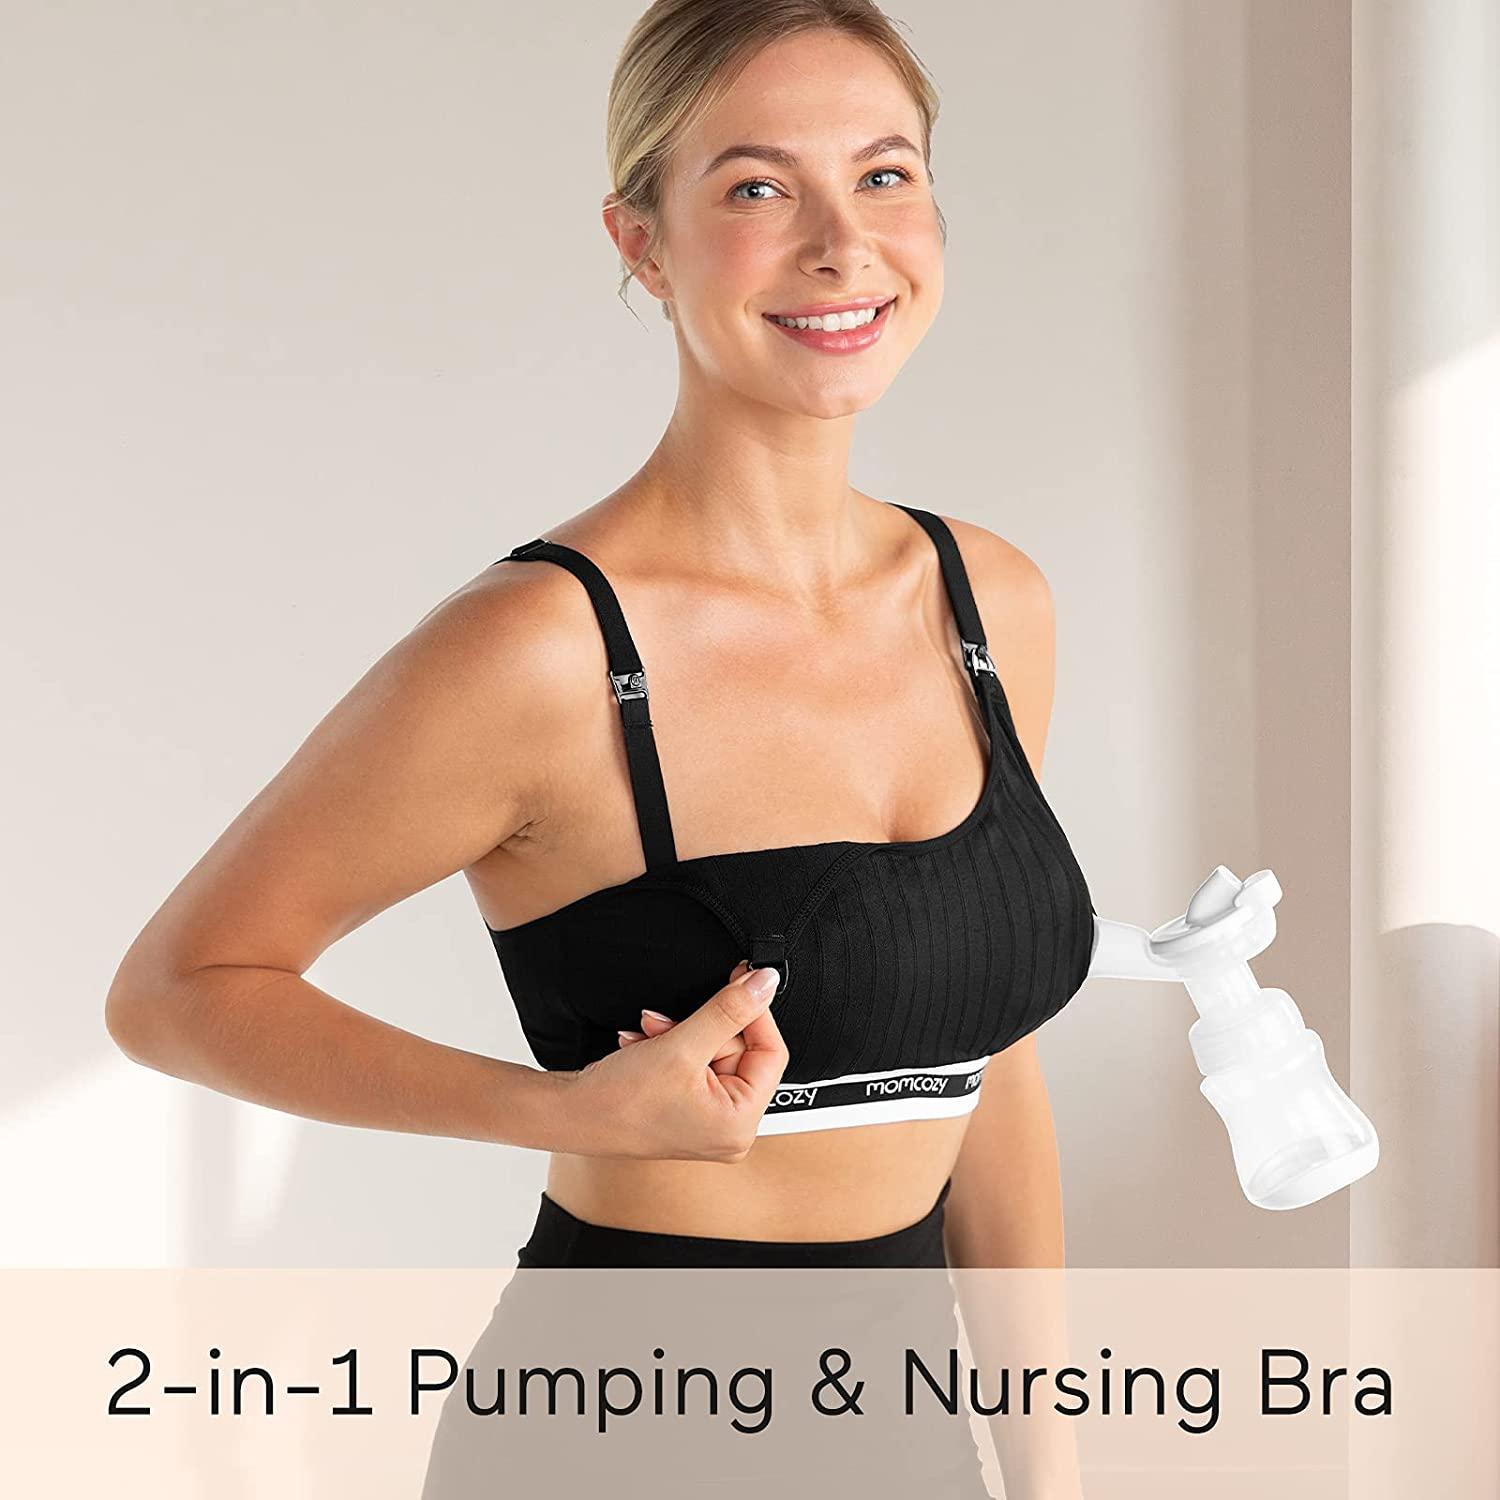 Hands Free Pumping Bra, Momcozy Adjustable Breast-Pumps Holding